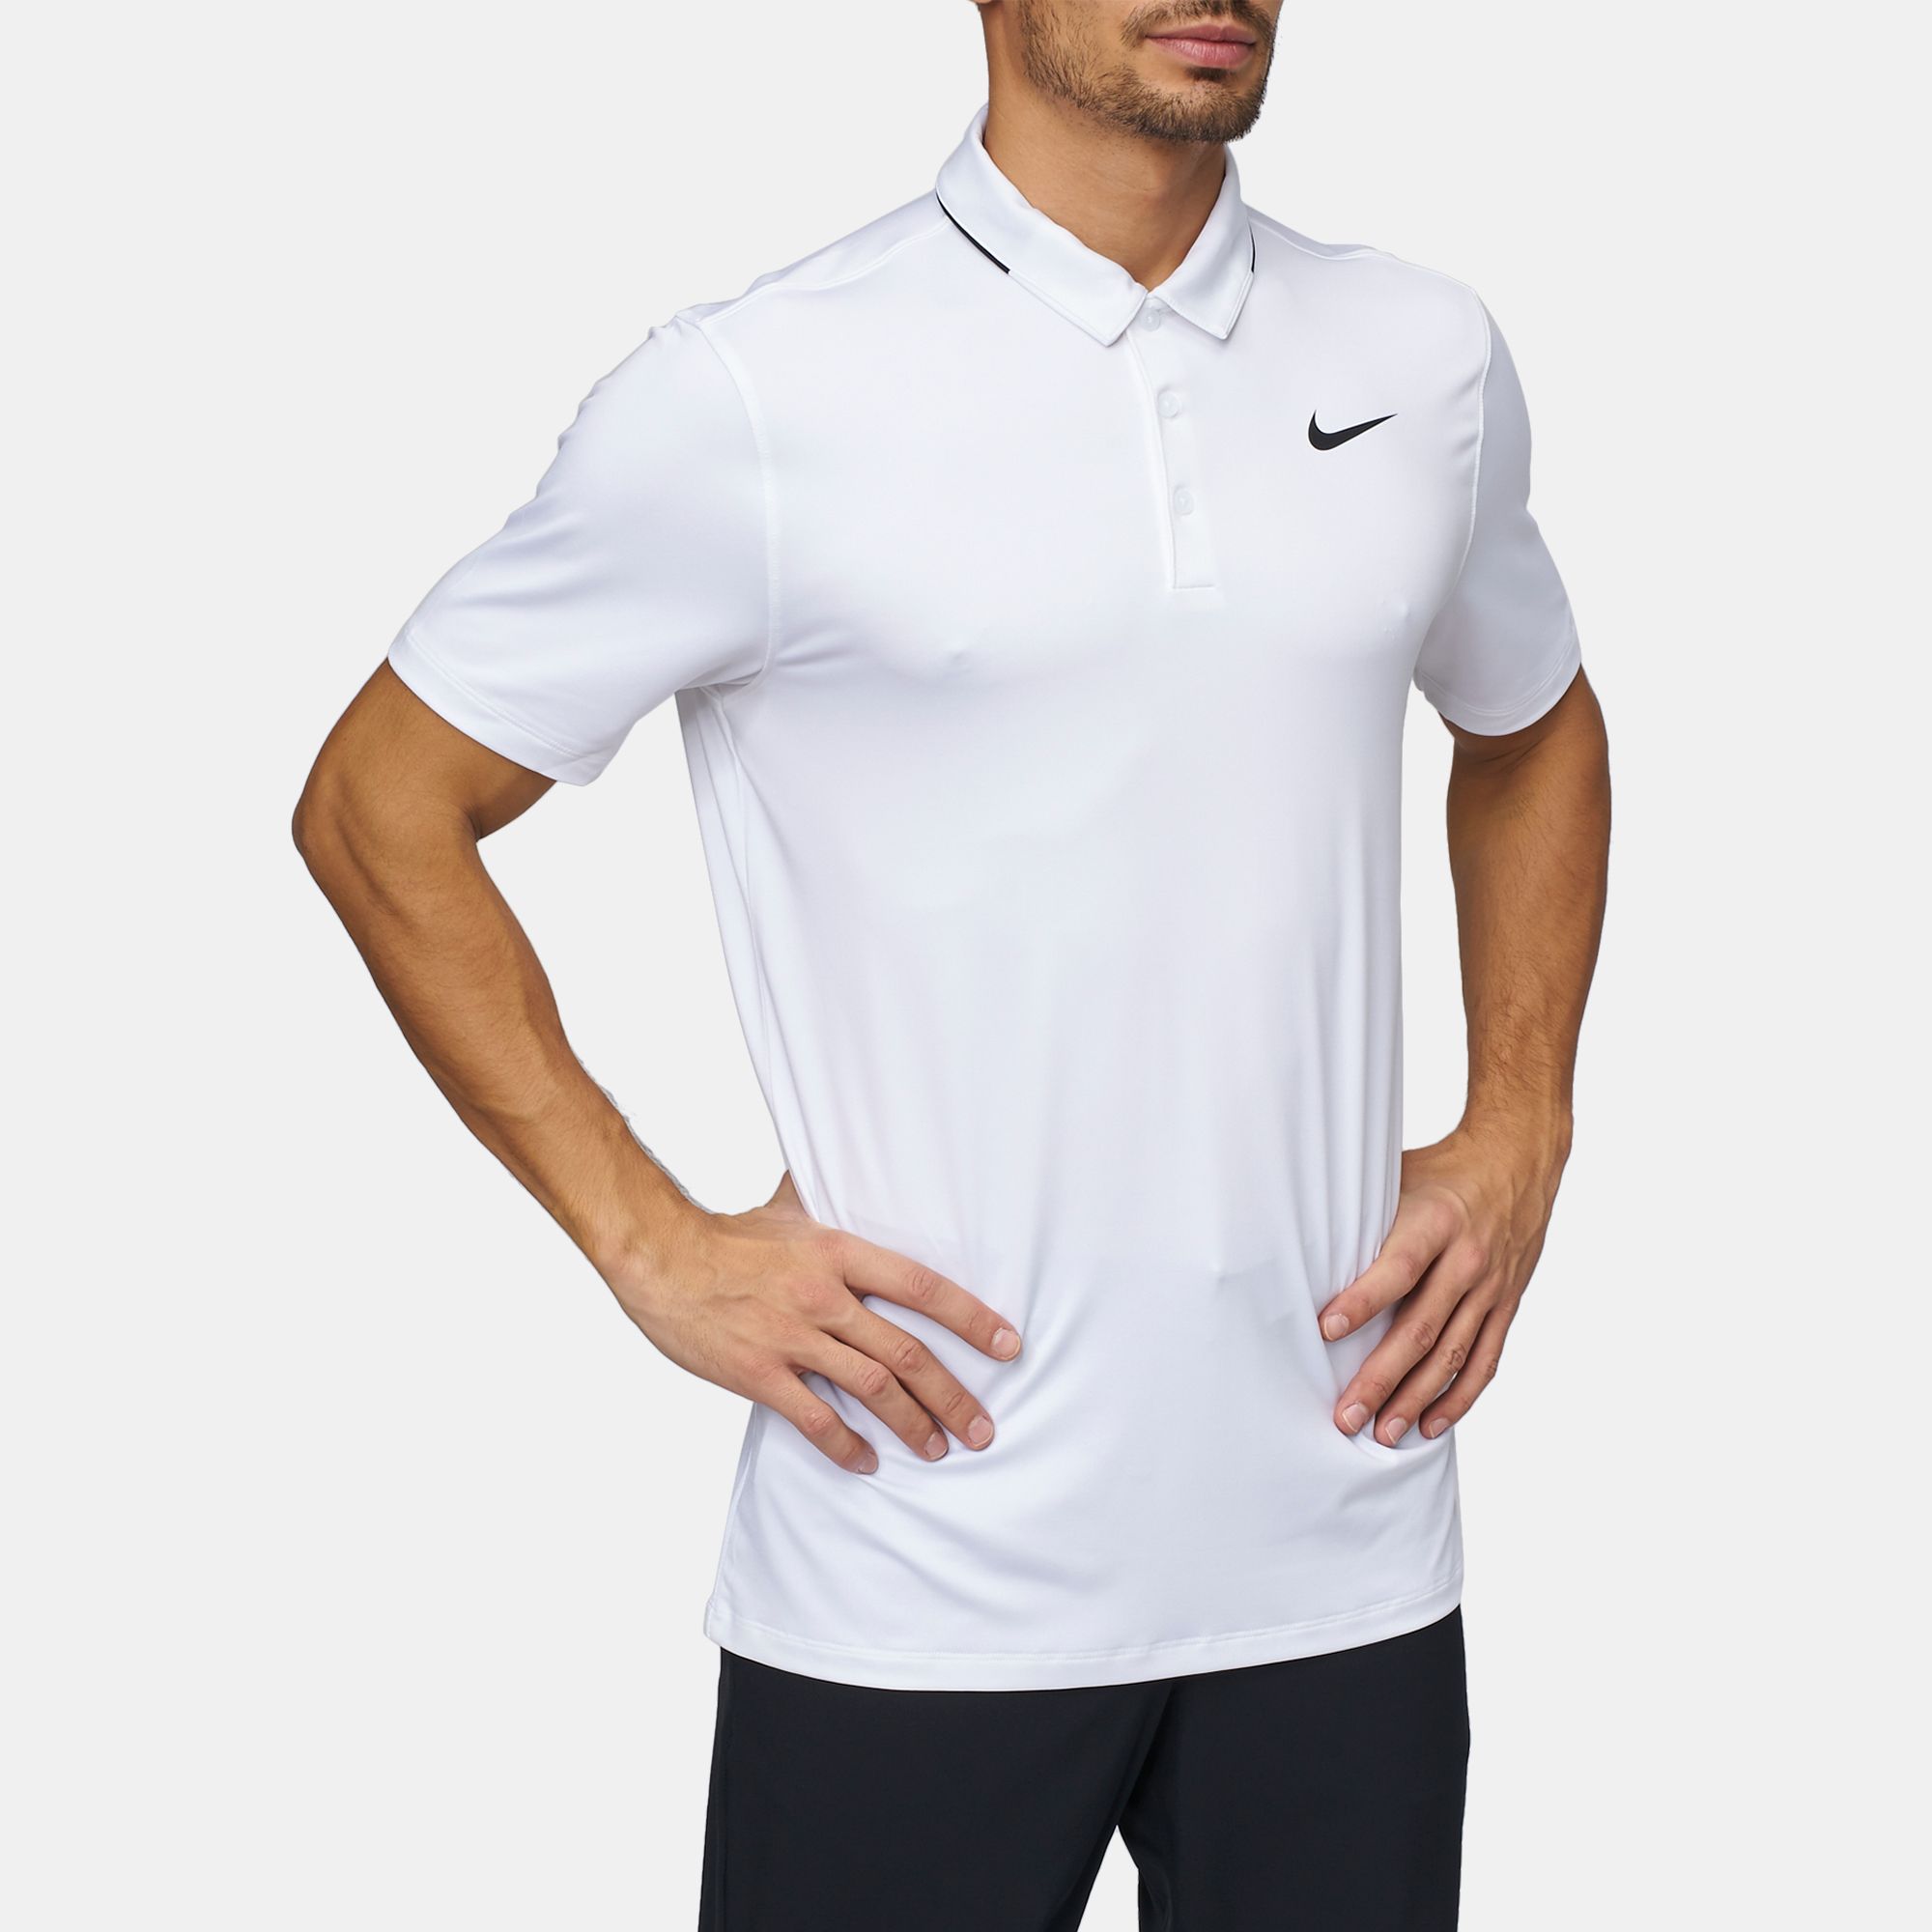 Shop White Nike Golf Icon Elite Polo T-Shirt for Mens by Nike Golf | SSS